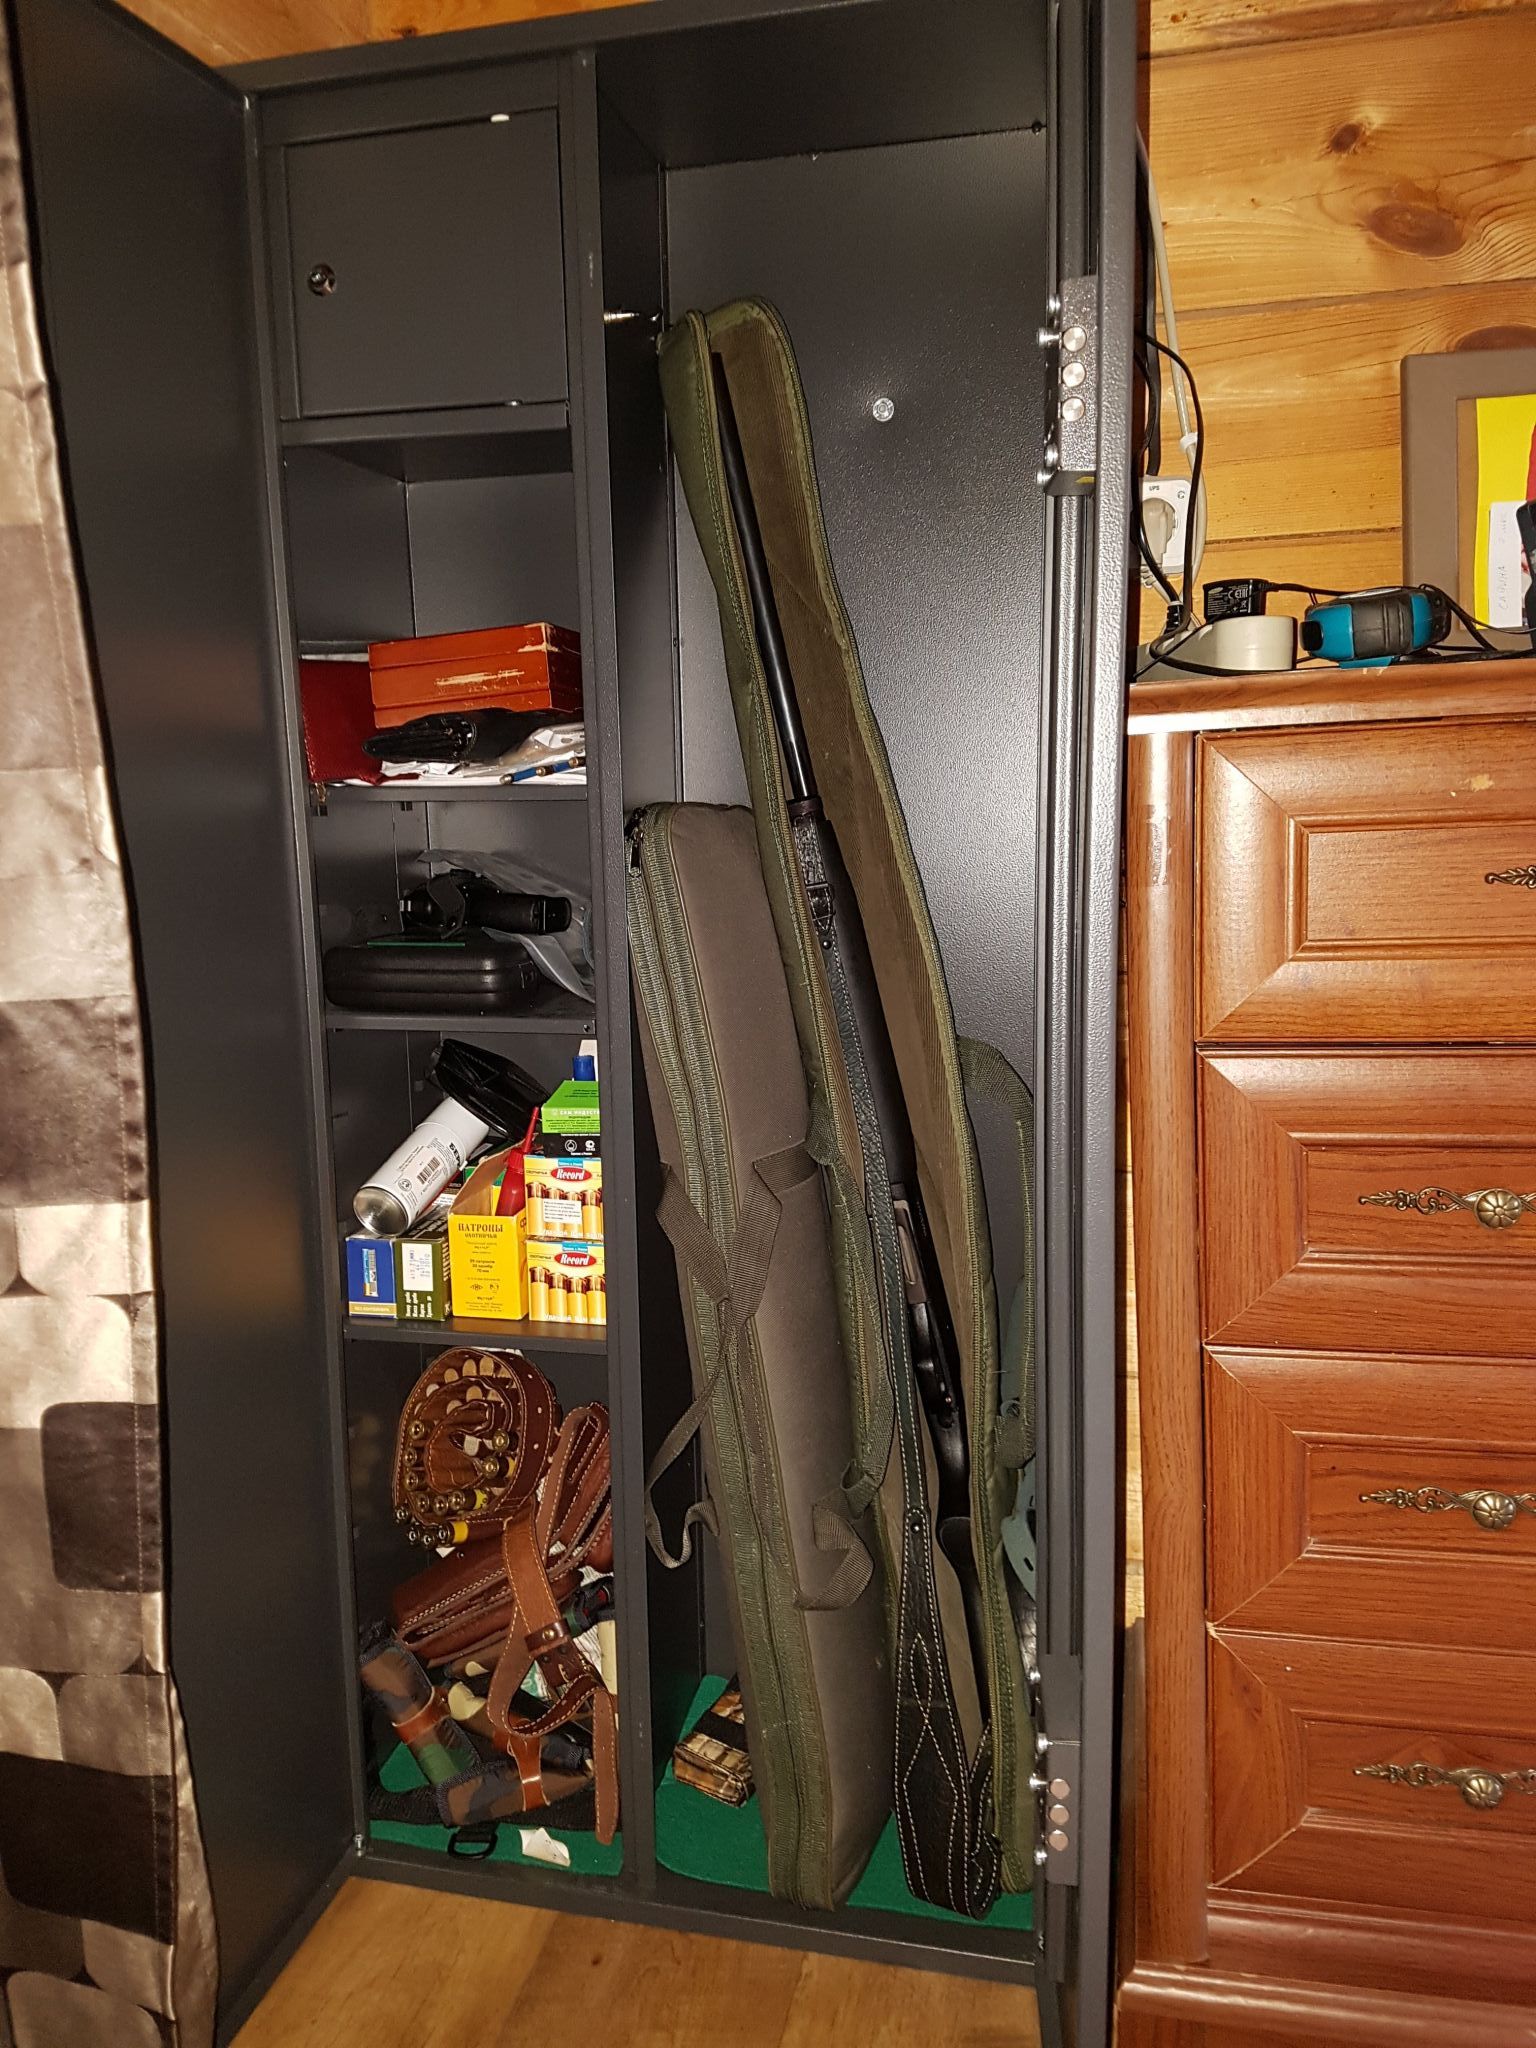 оружейный шкаф aiko чирок 1462